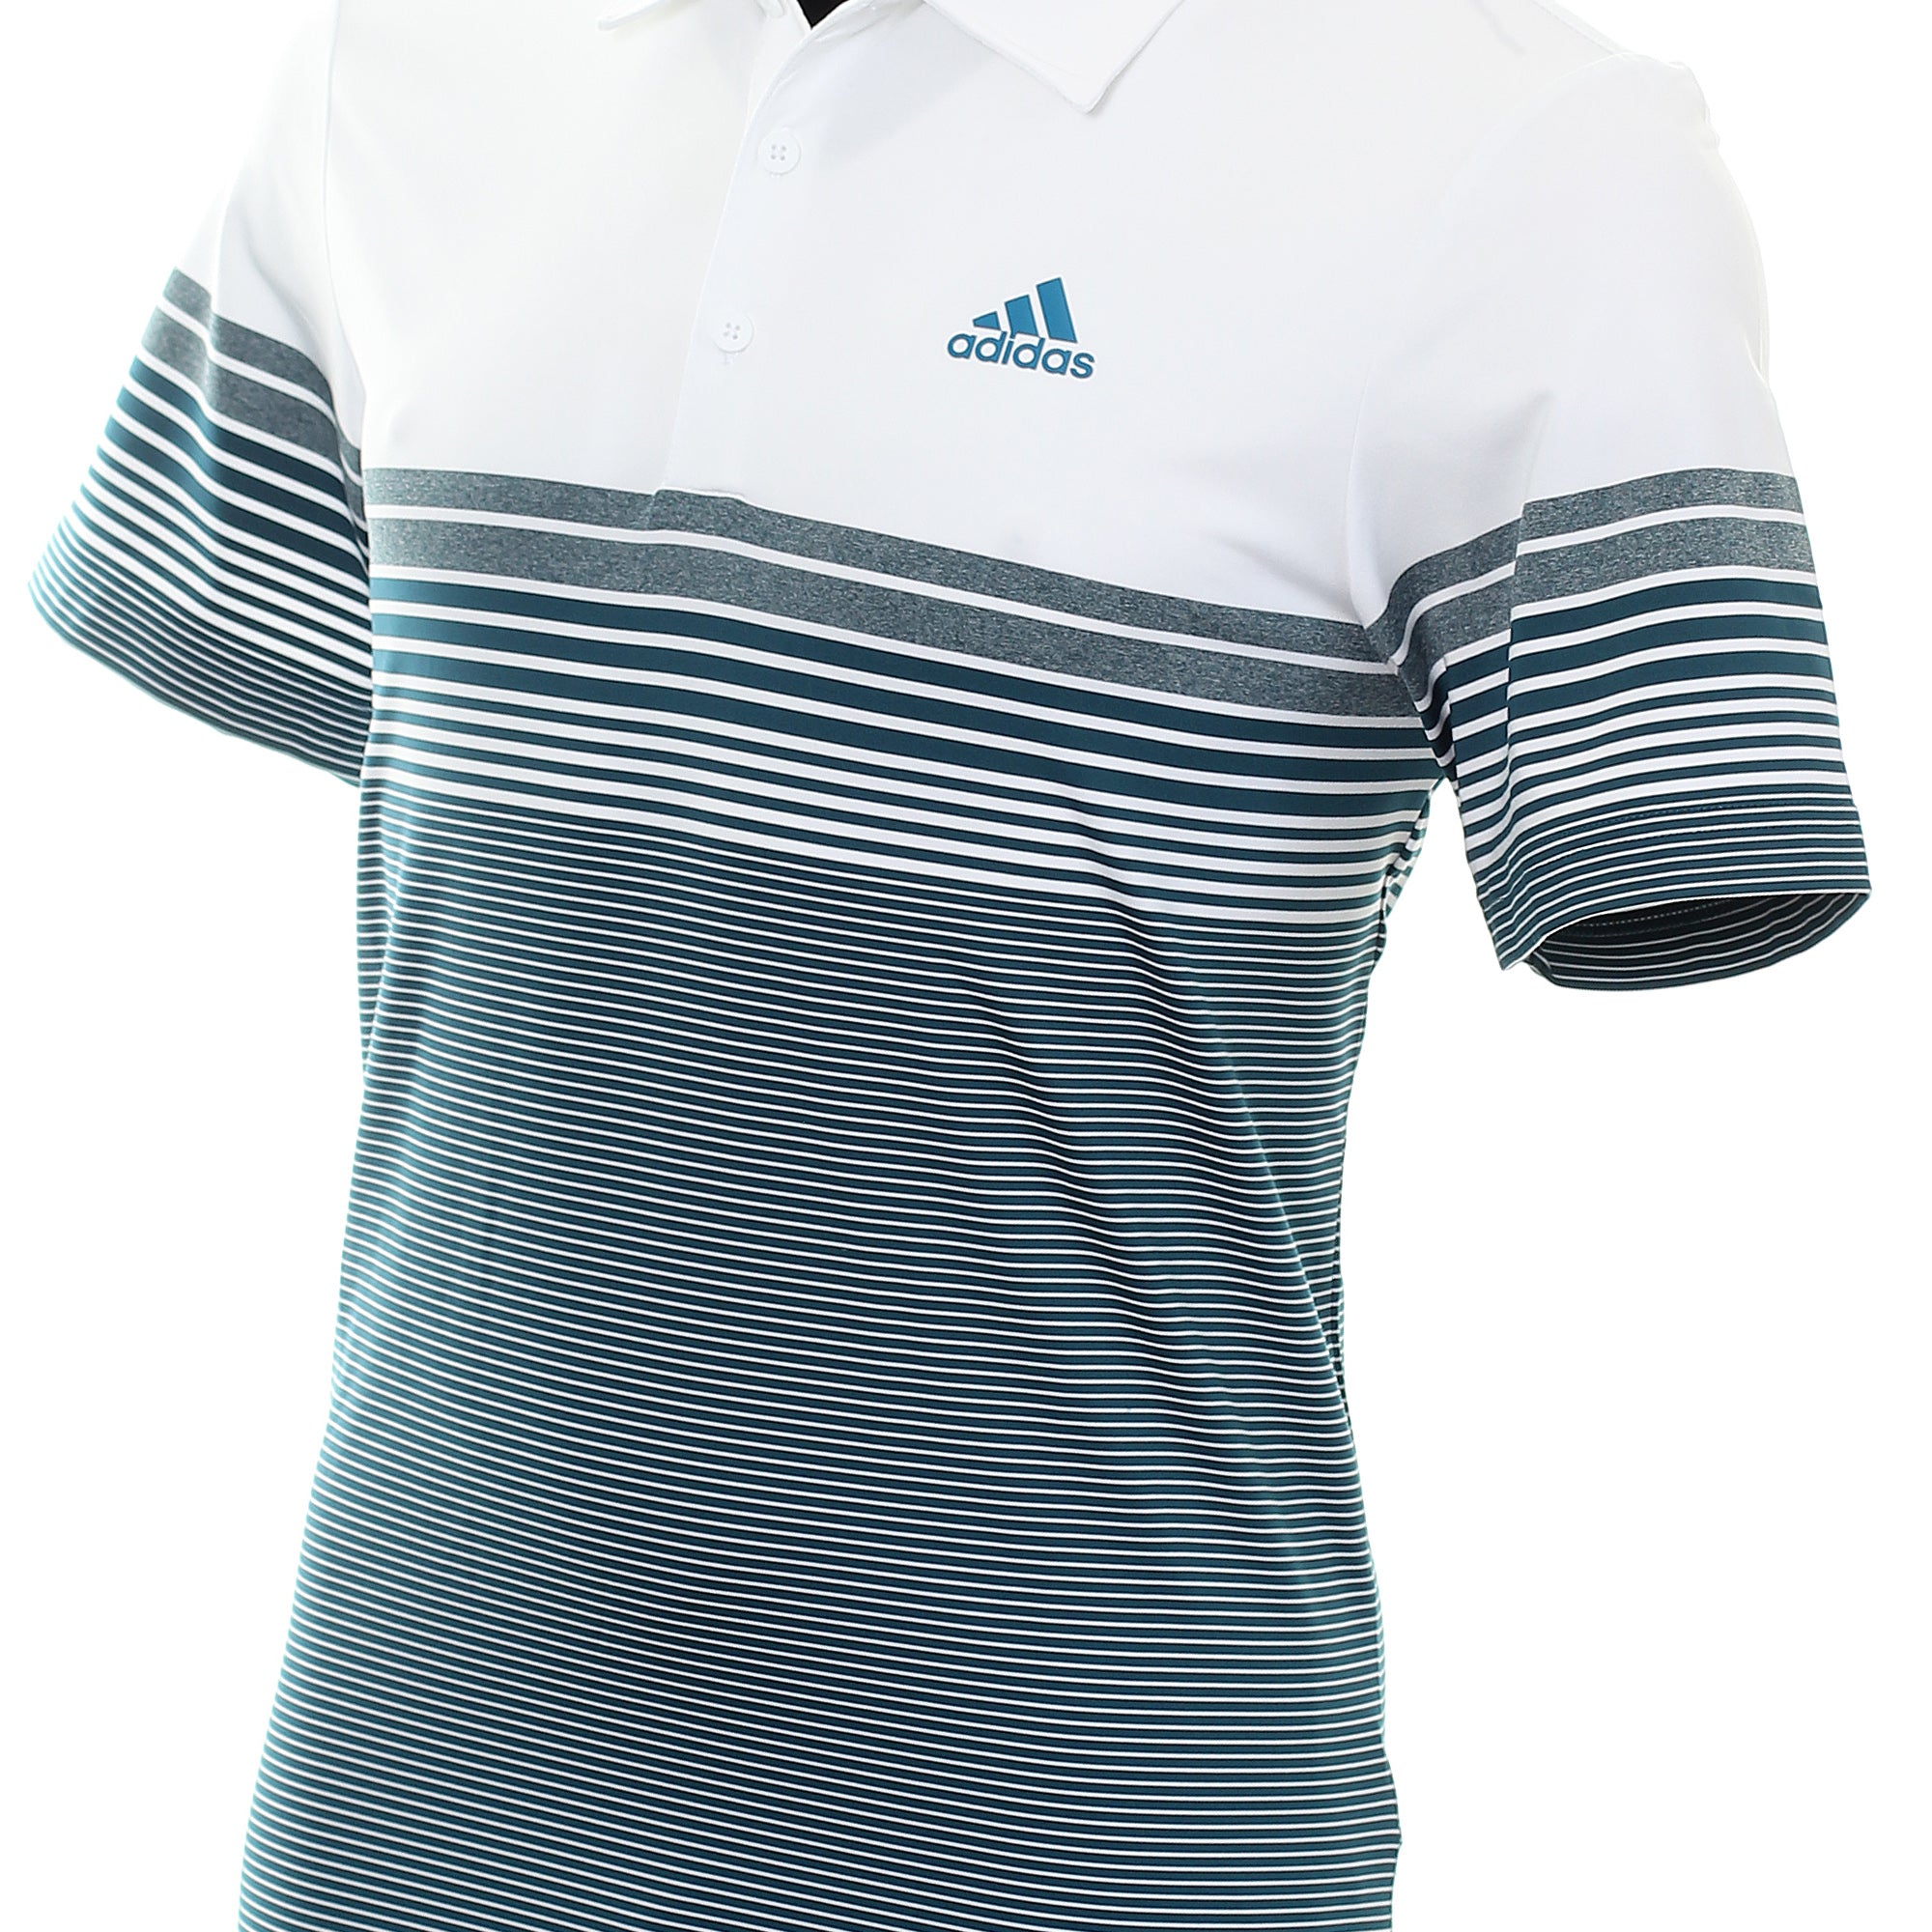 ultimate365 gradient block stripe polo shirt